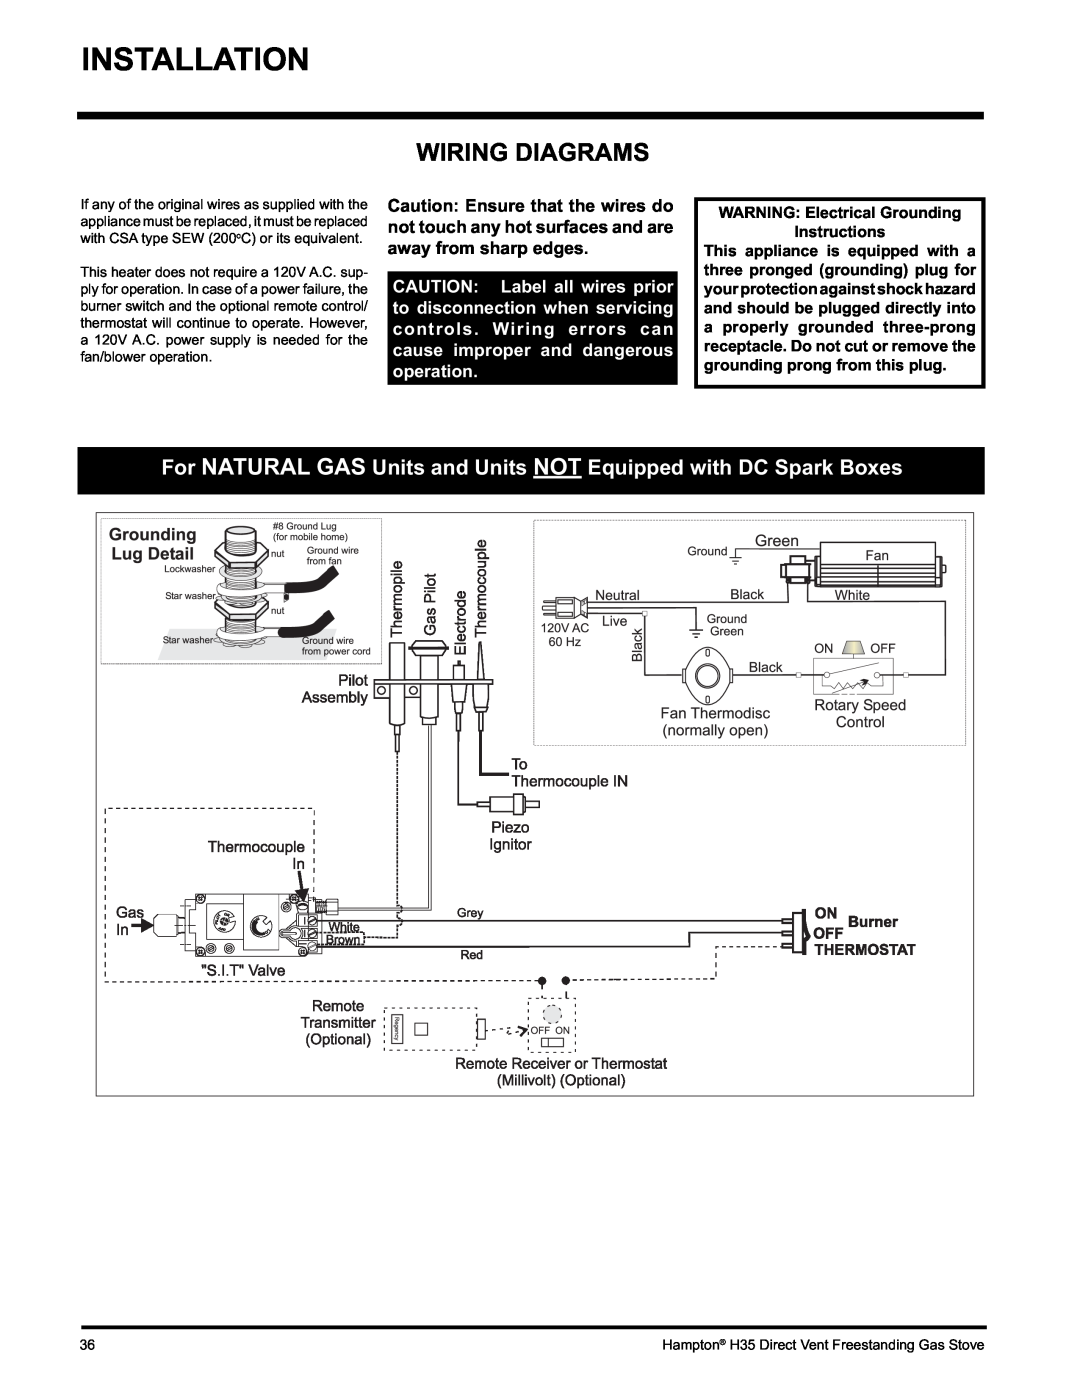 Hampton Direct H35-NG1, H35-LP1 installation manual Installation, Wiring Diagrams, WARNING Electrical Grounding Instructions 